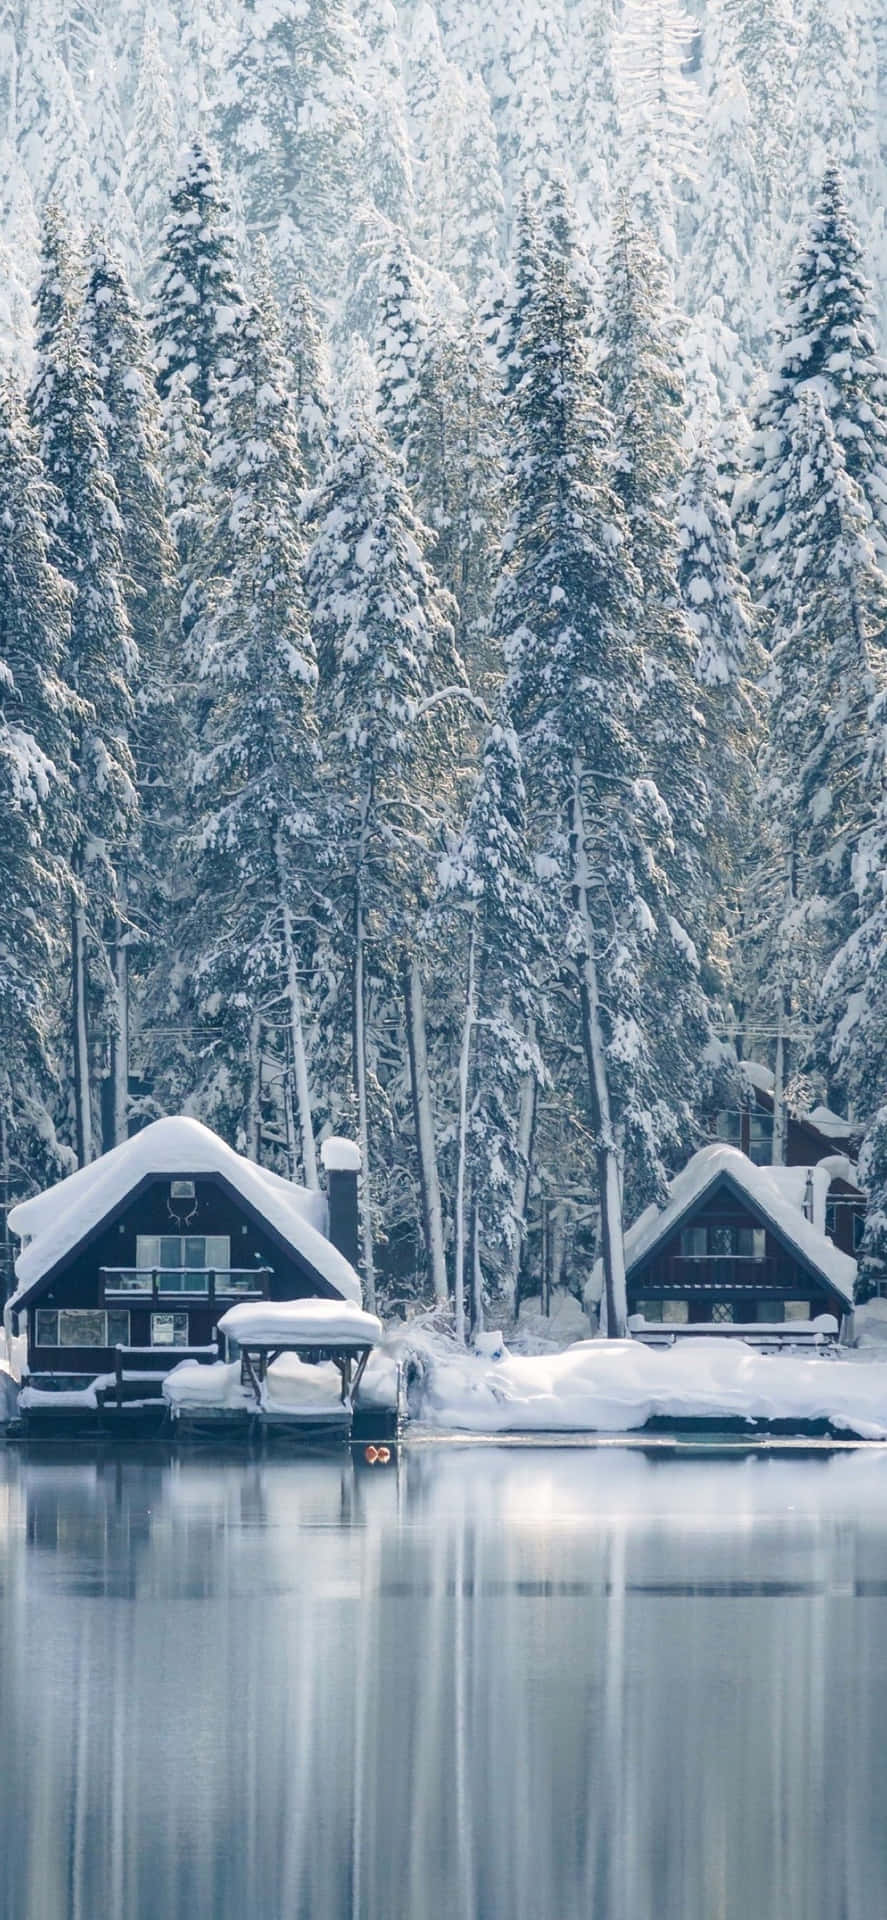 Wallpapernjut Av Naturens Vinterunderland Med Snöigt Iphone-bakgrundsbild. Wallpaper